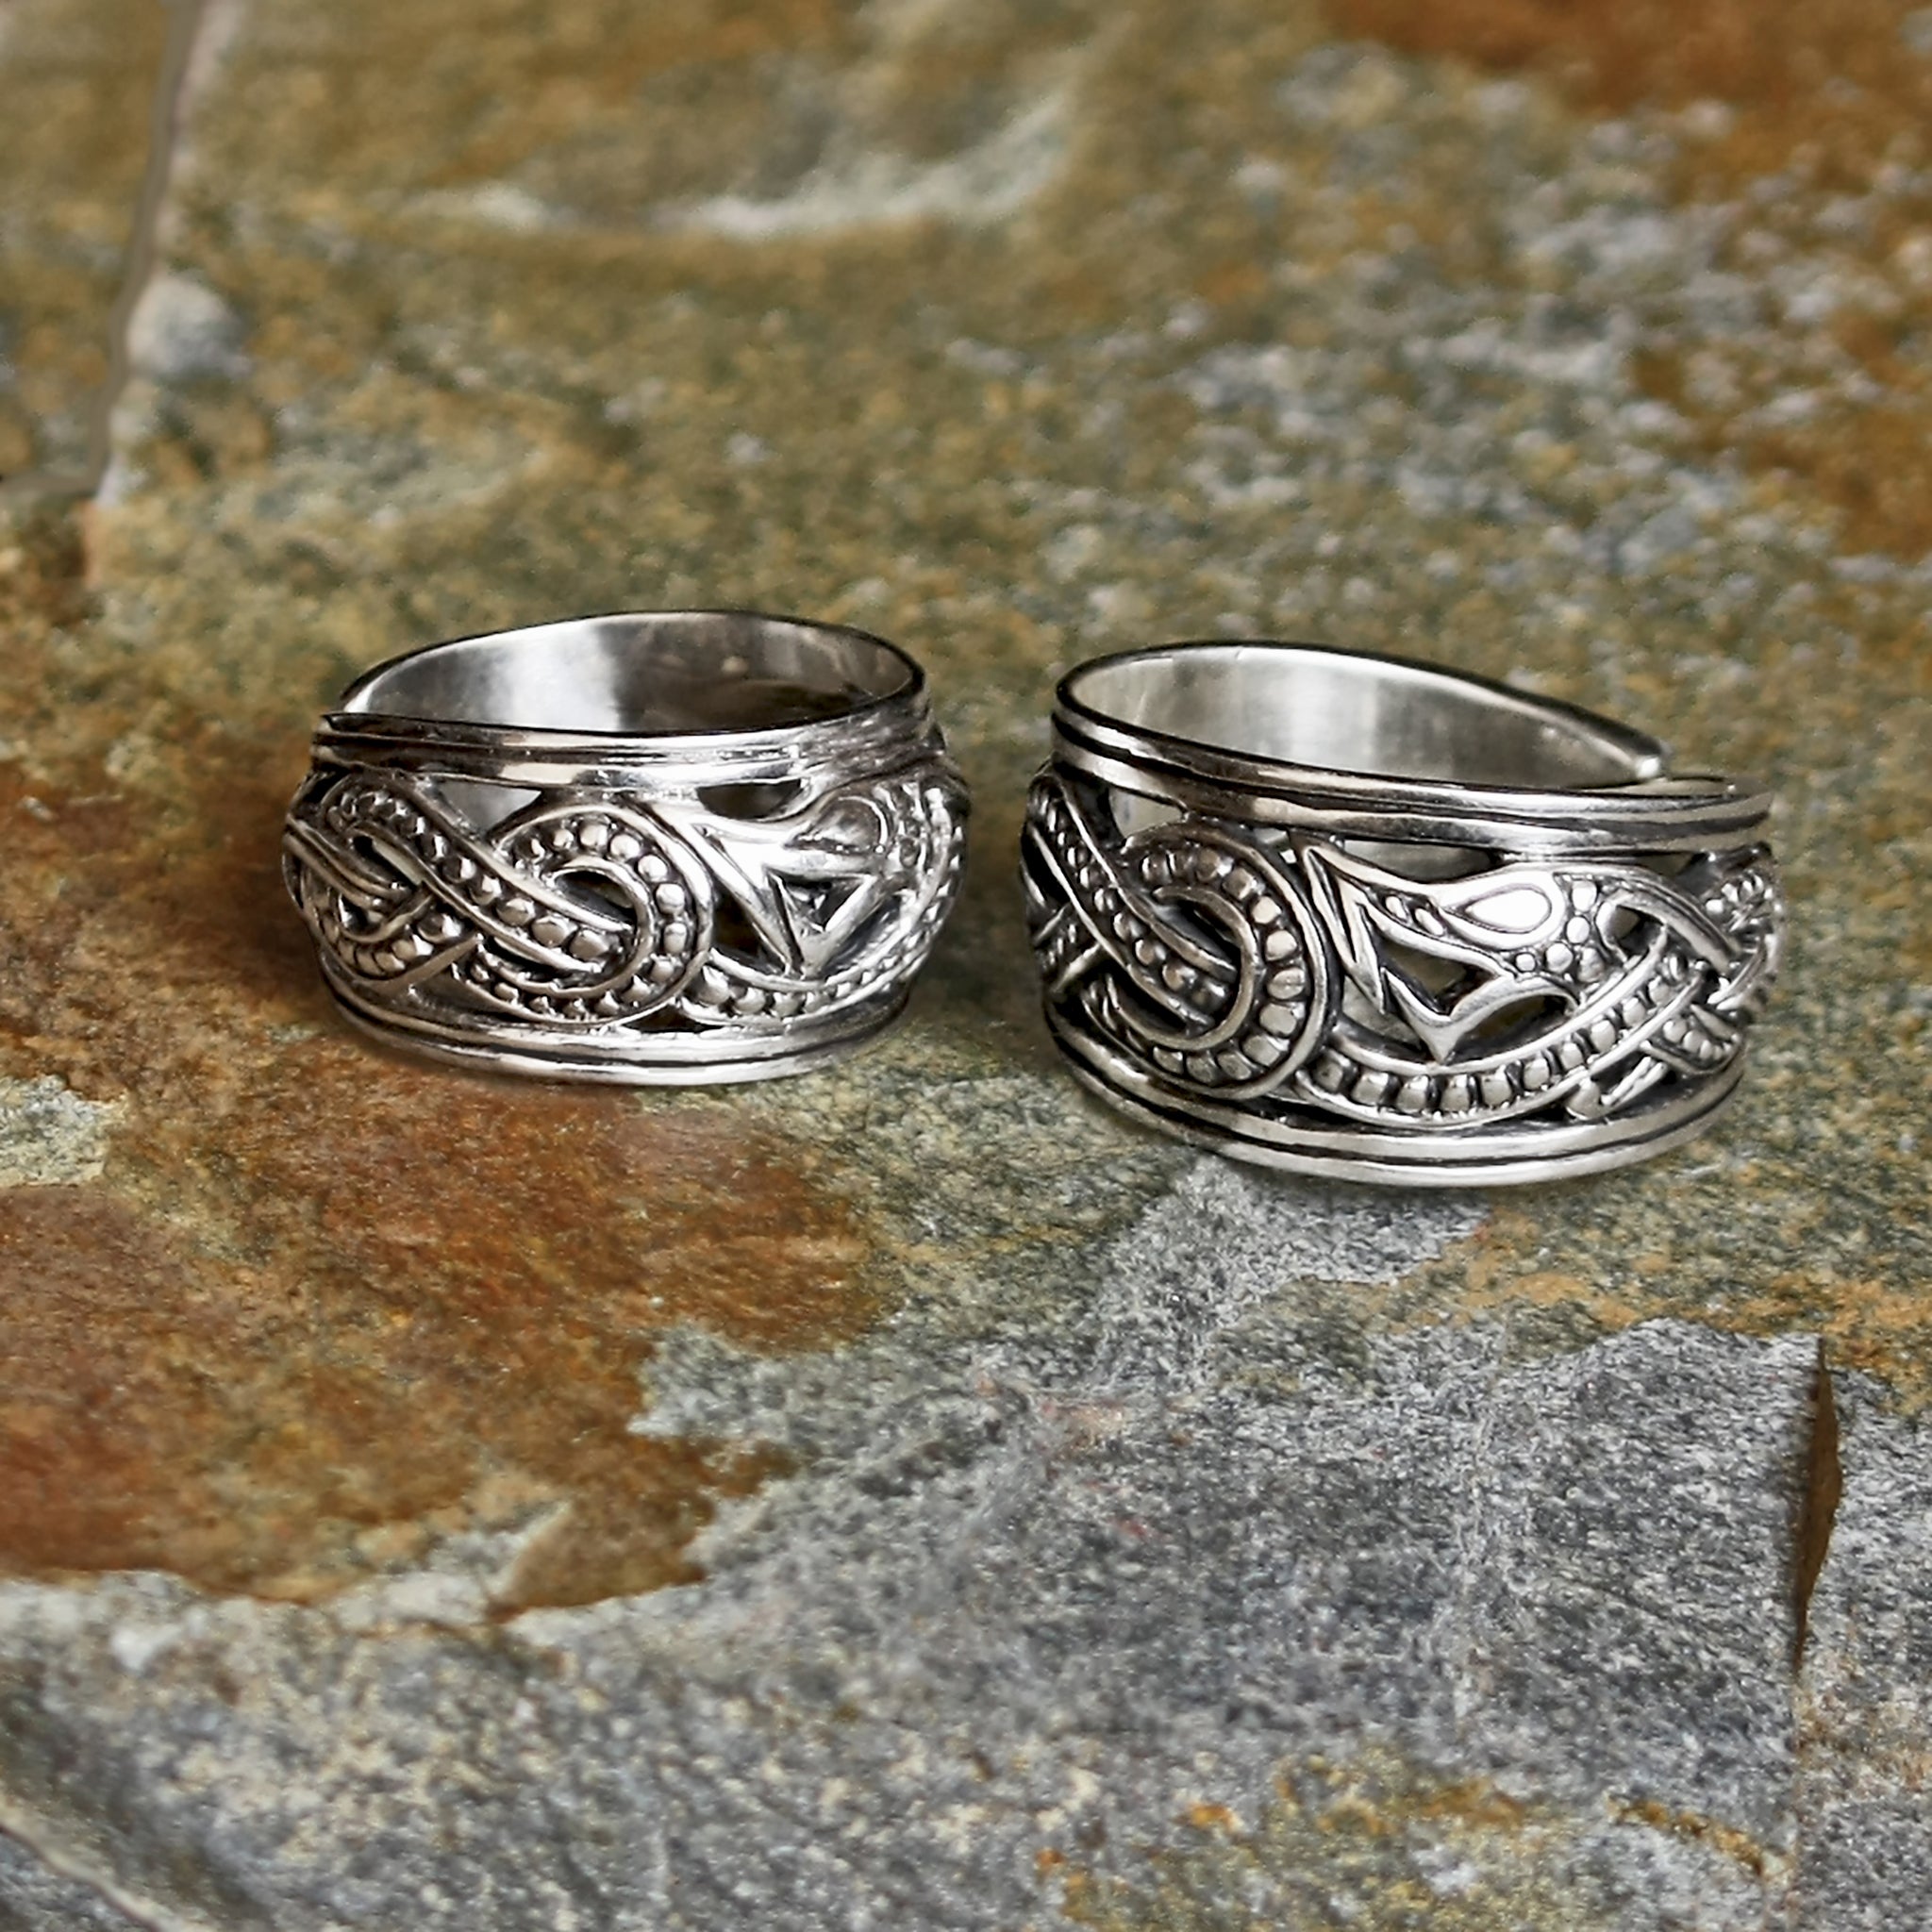 Silver Openwork Ringerike Viking Dragon Rings on Rock - Small & Large Sizes